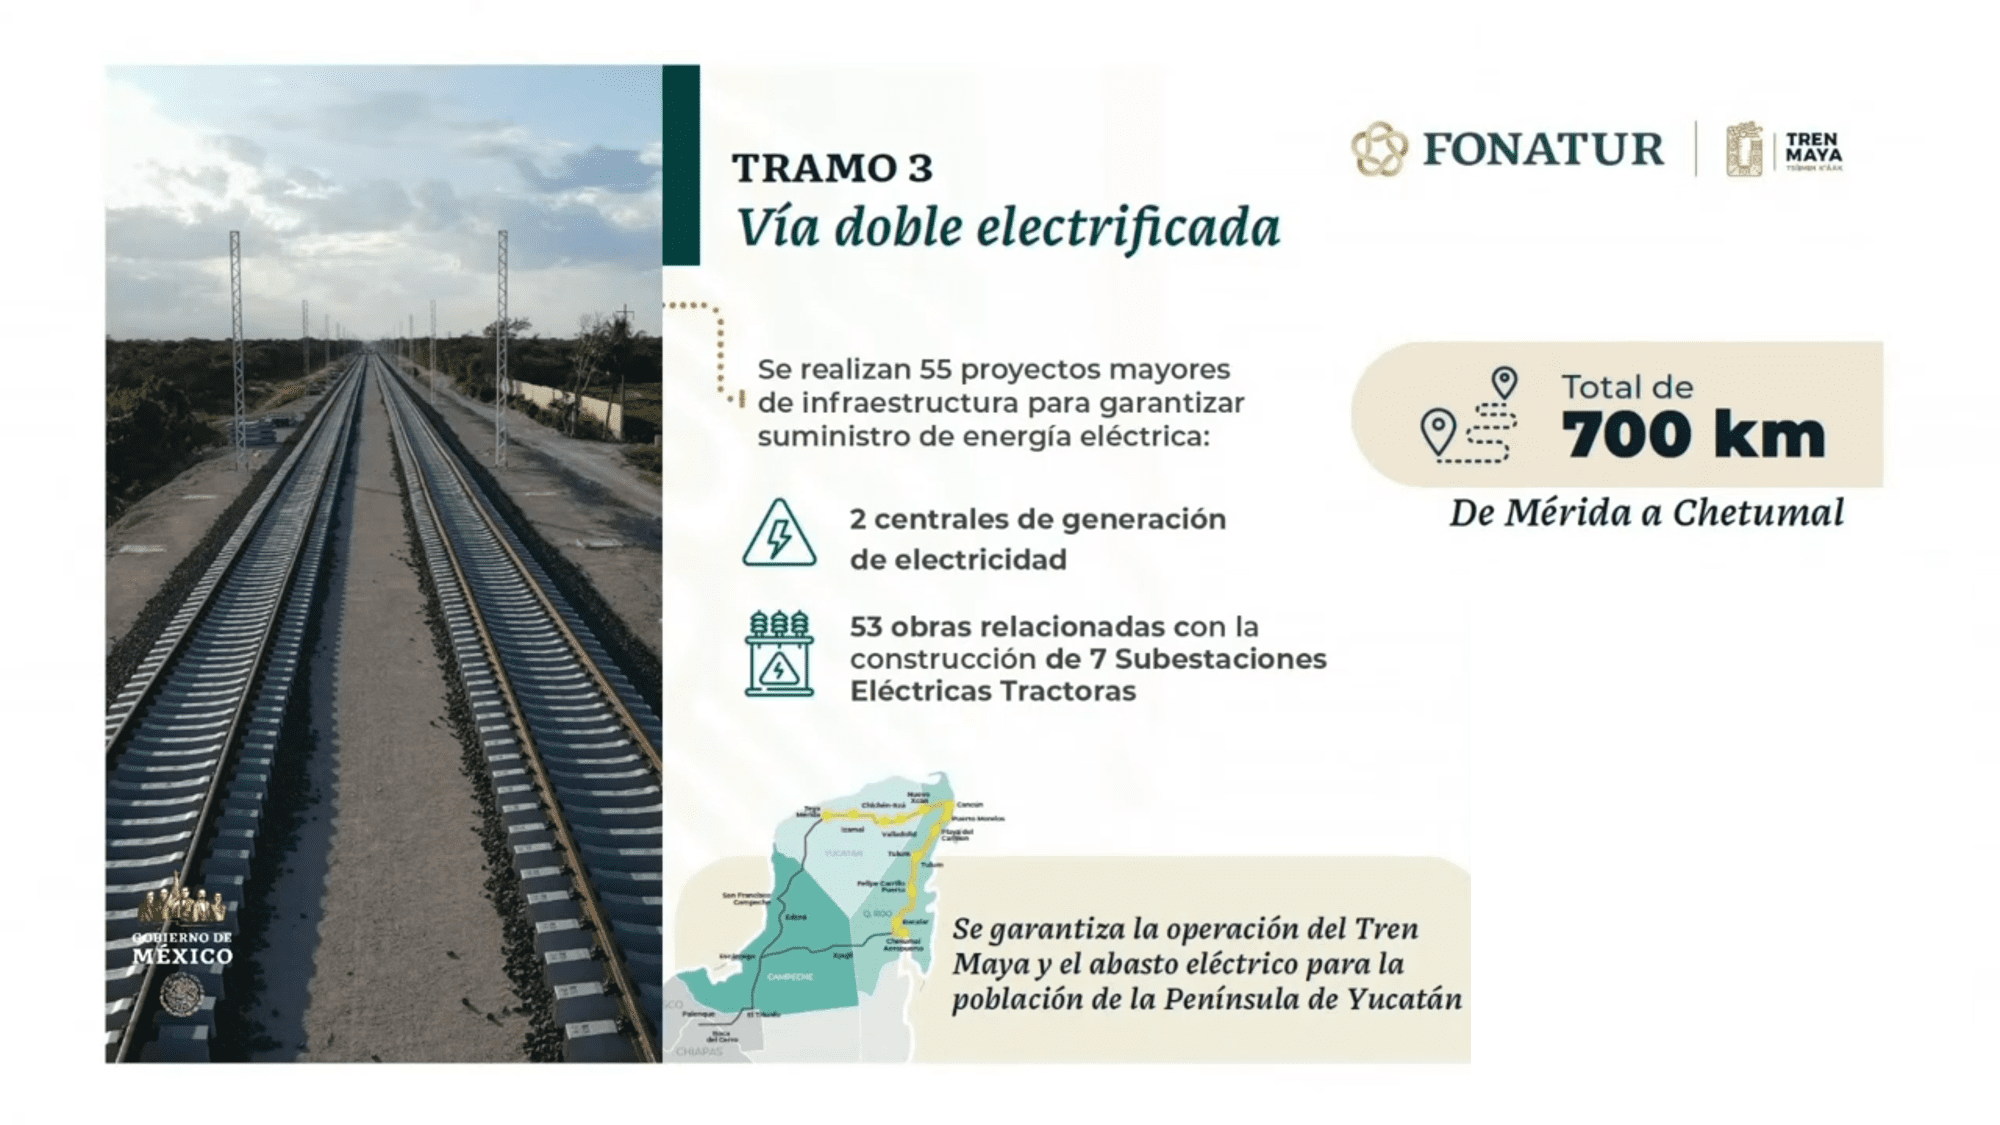 Tren Maya Tramo 2, via doble electrificada